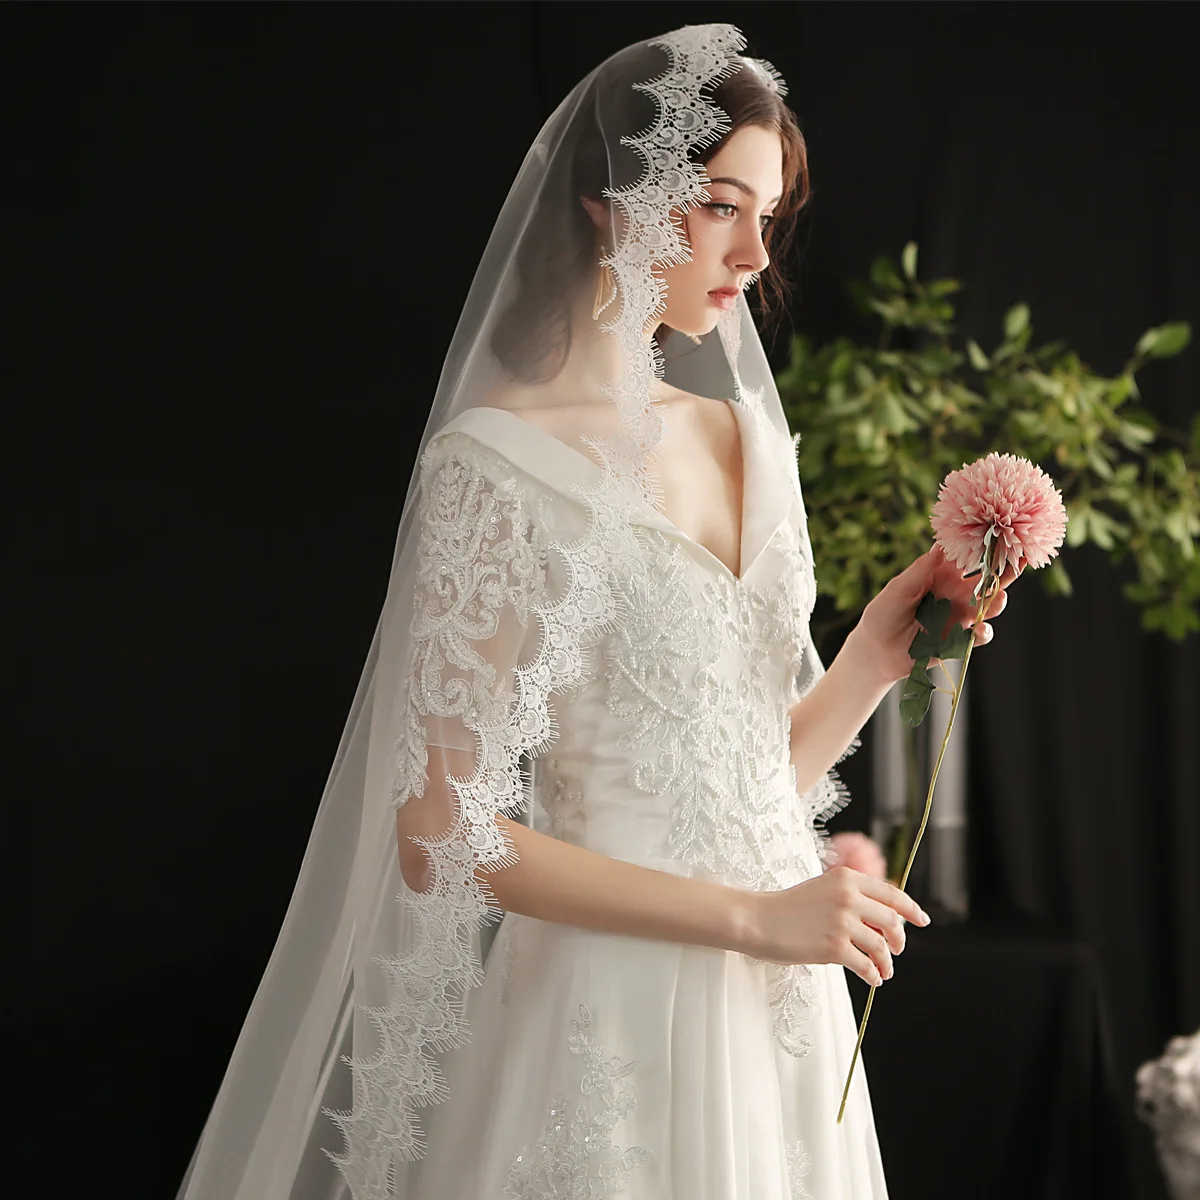 One Layer Full Edge with Eye Lash Lace Wedding Veil 3M 4M With Comb Elegant Long Bridal Veil